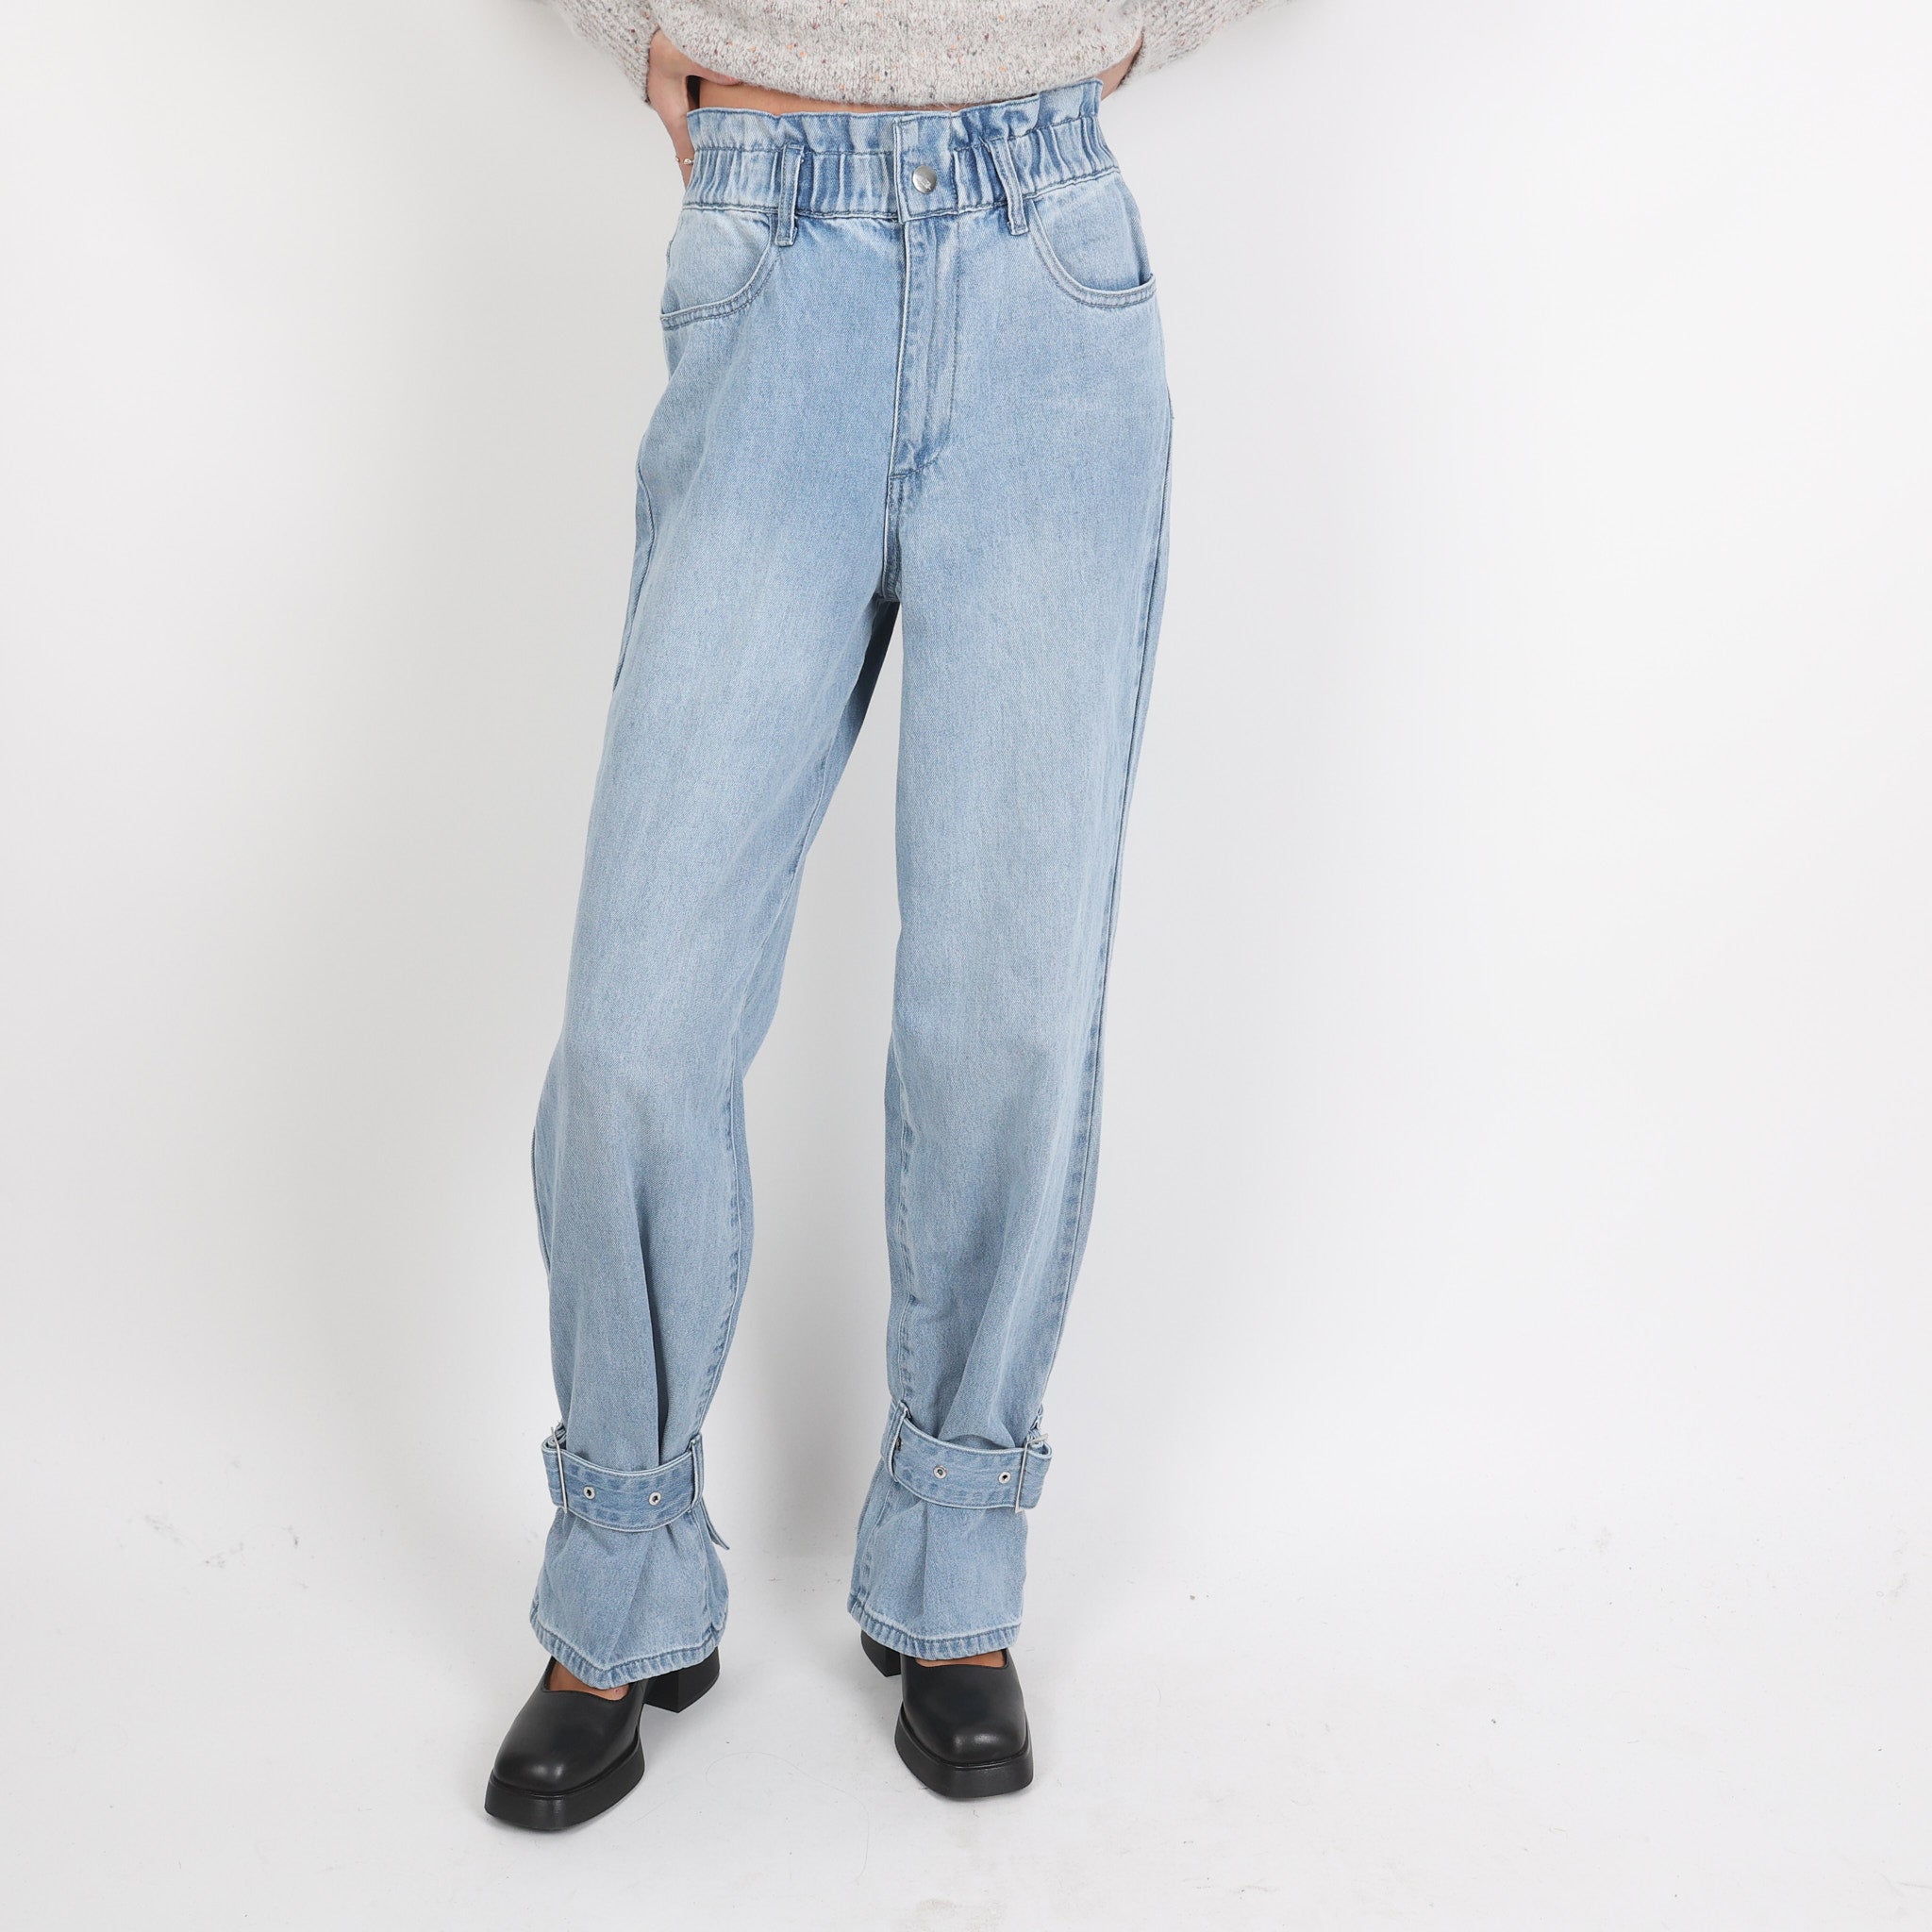 Jeans, Waist 25